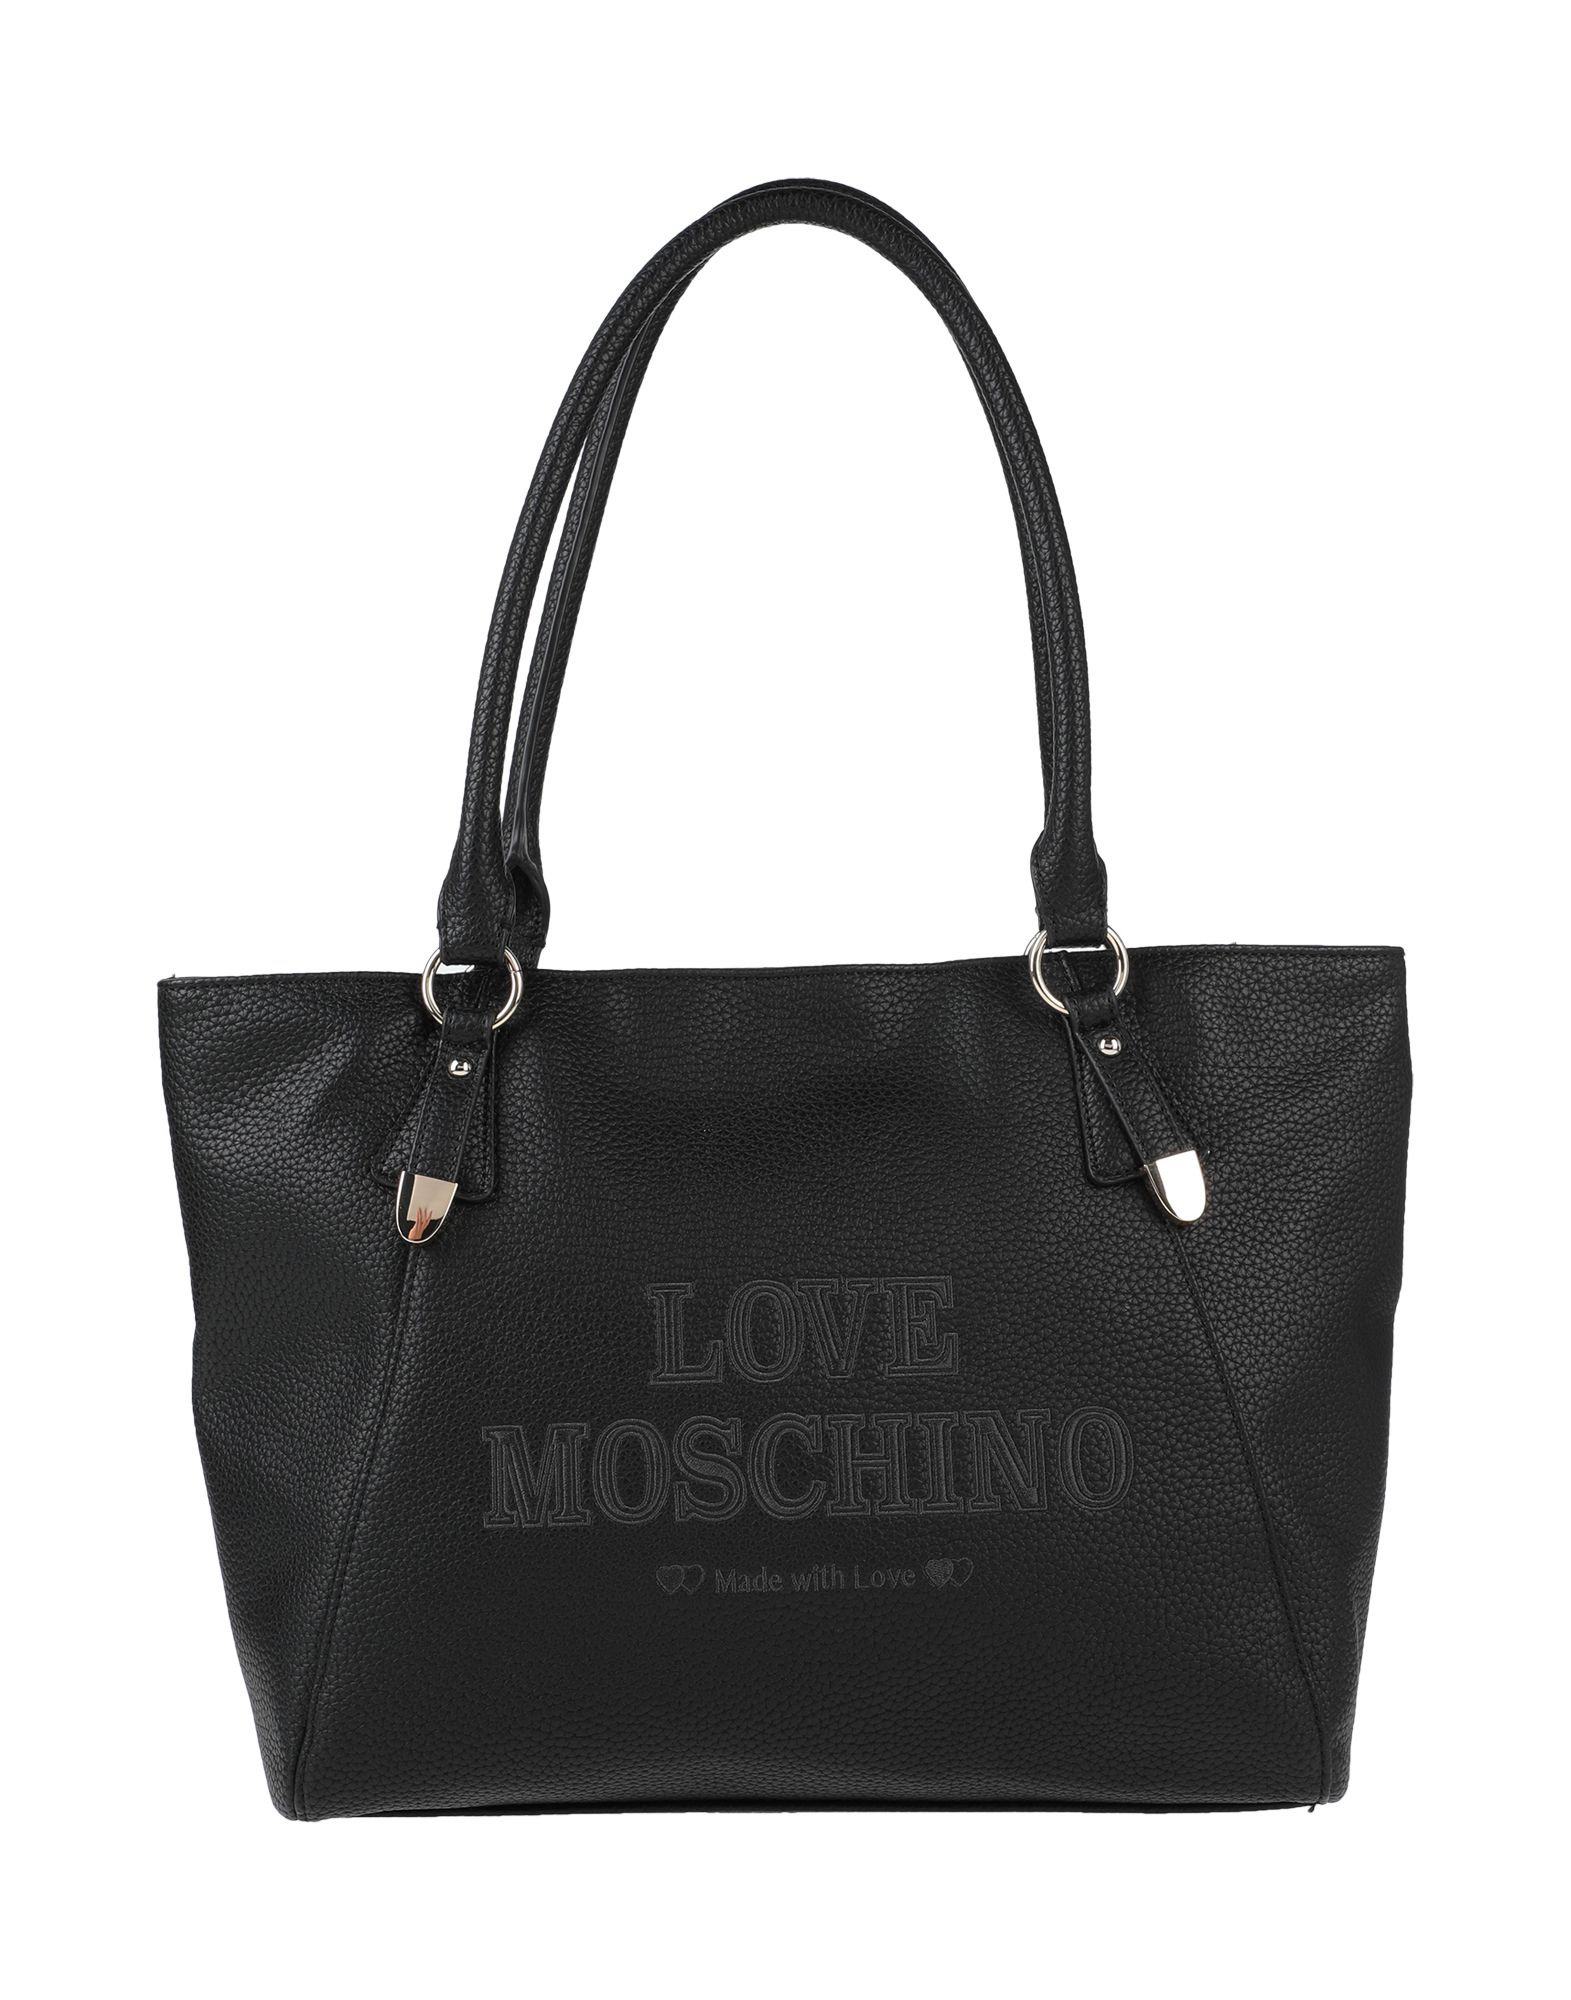 LOVE MOSCHINO Handbags - Item 45532934